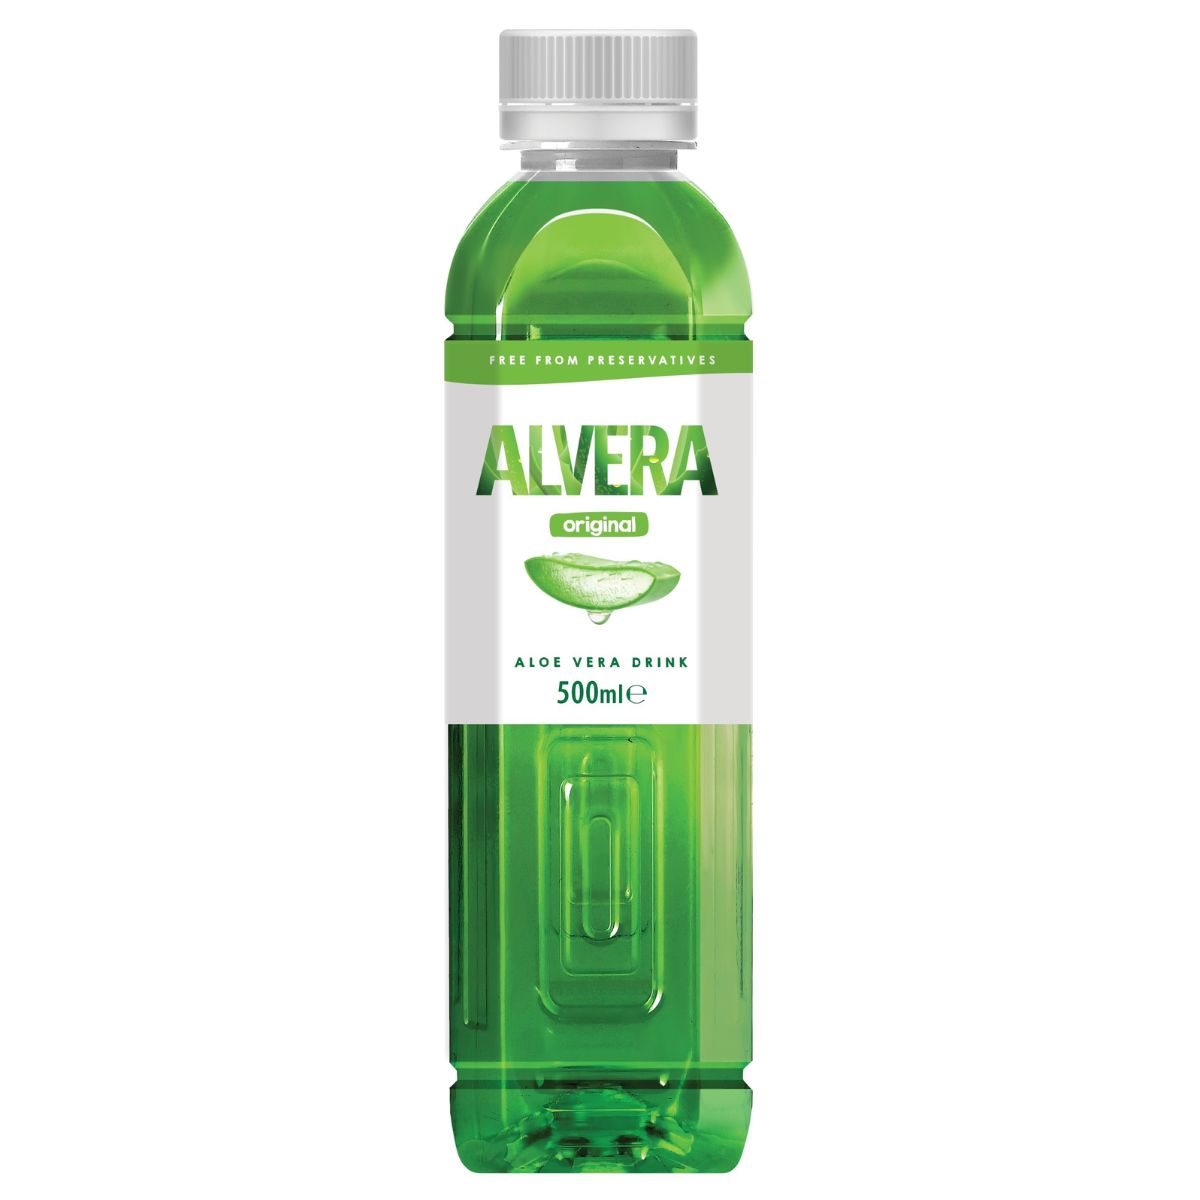 A bottle of Alvera - Natural Original Drink - 500ml on a white background.